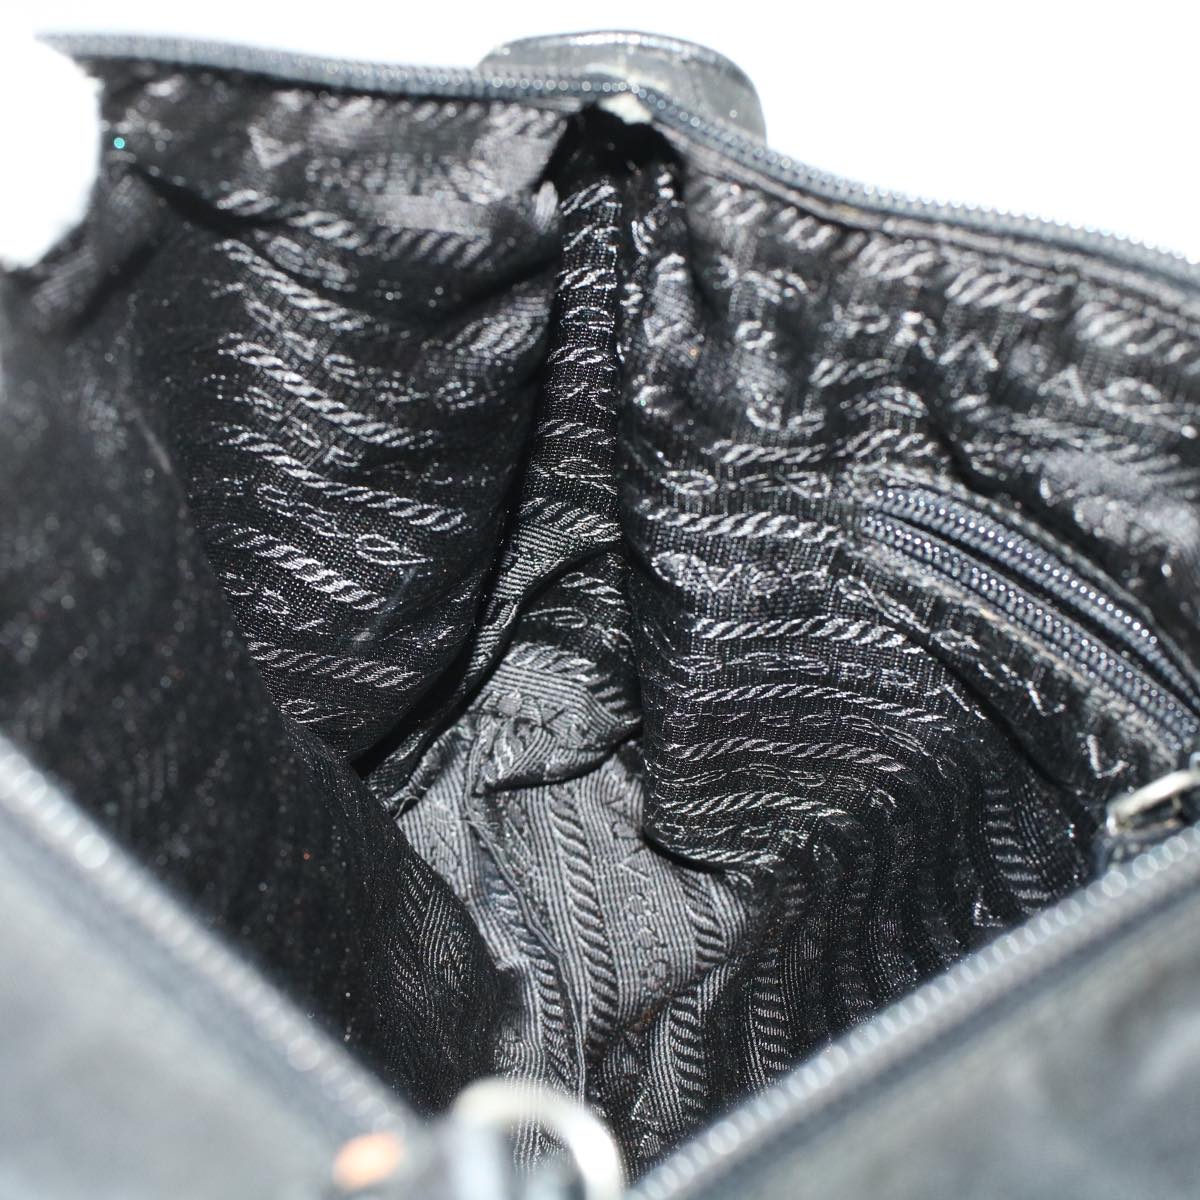 PRADA Hand Bag Nylon Black Auth bs6059